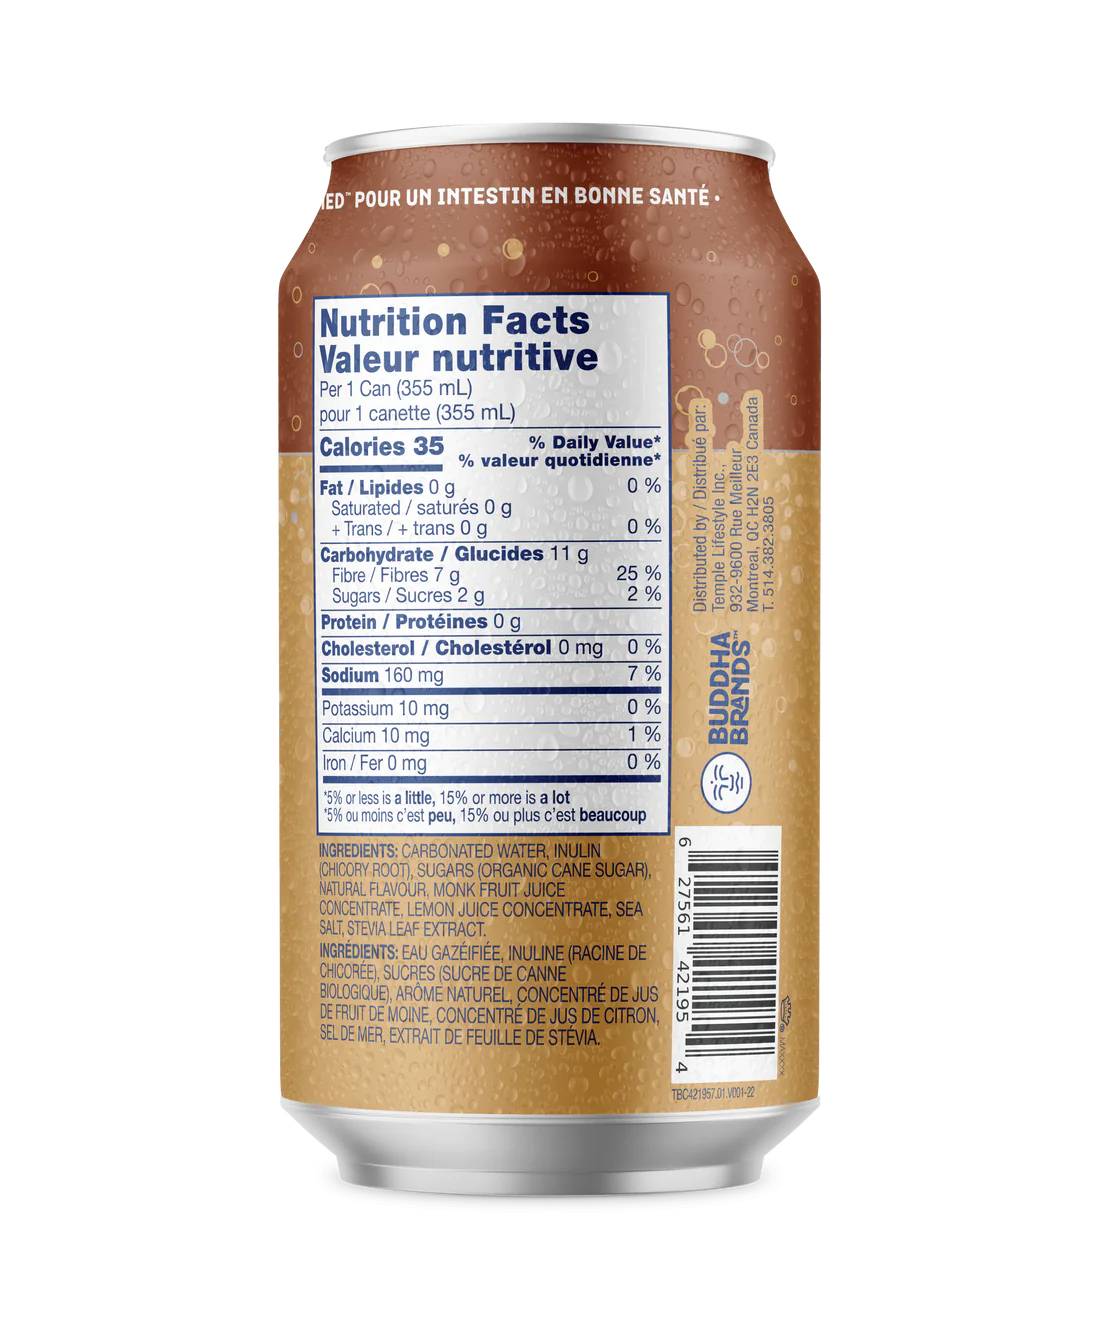 Thirsty Buddha Soda Root Beer / 12-pack